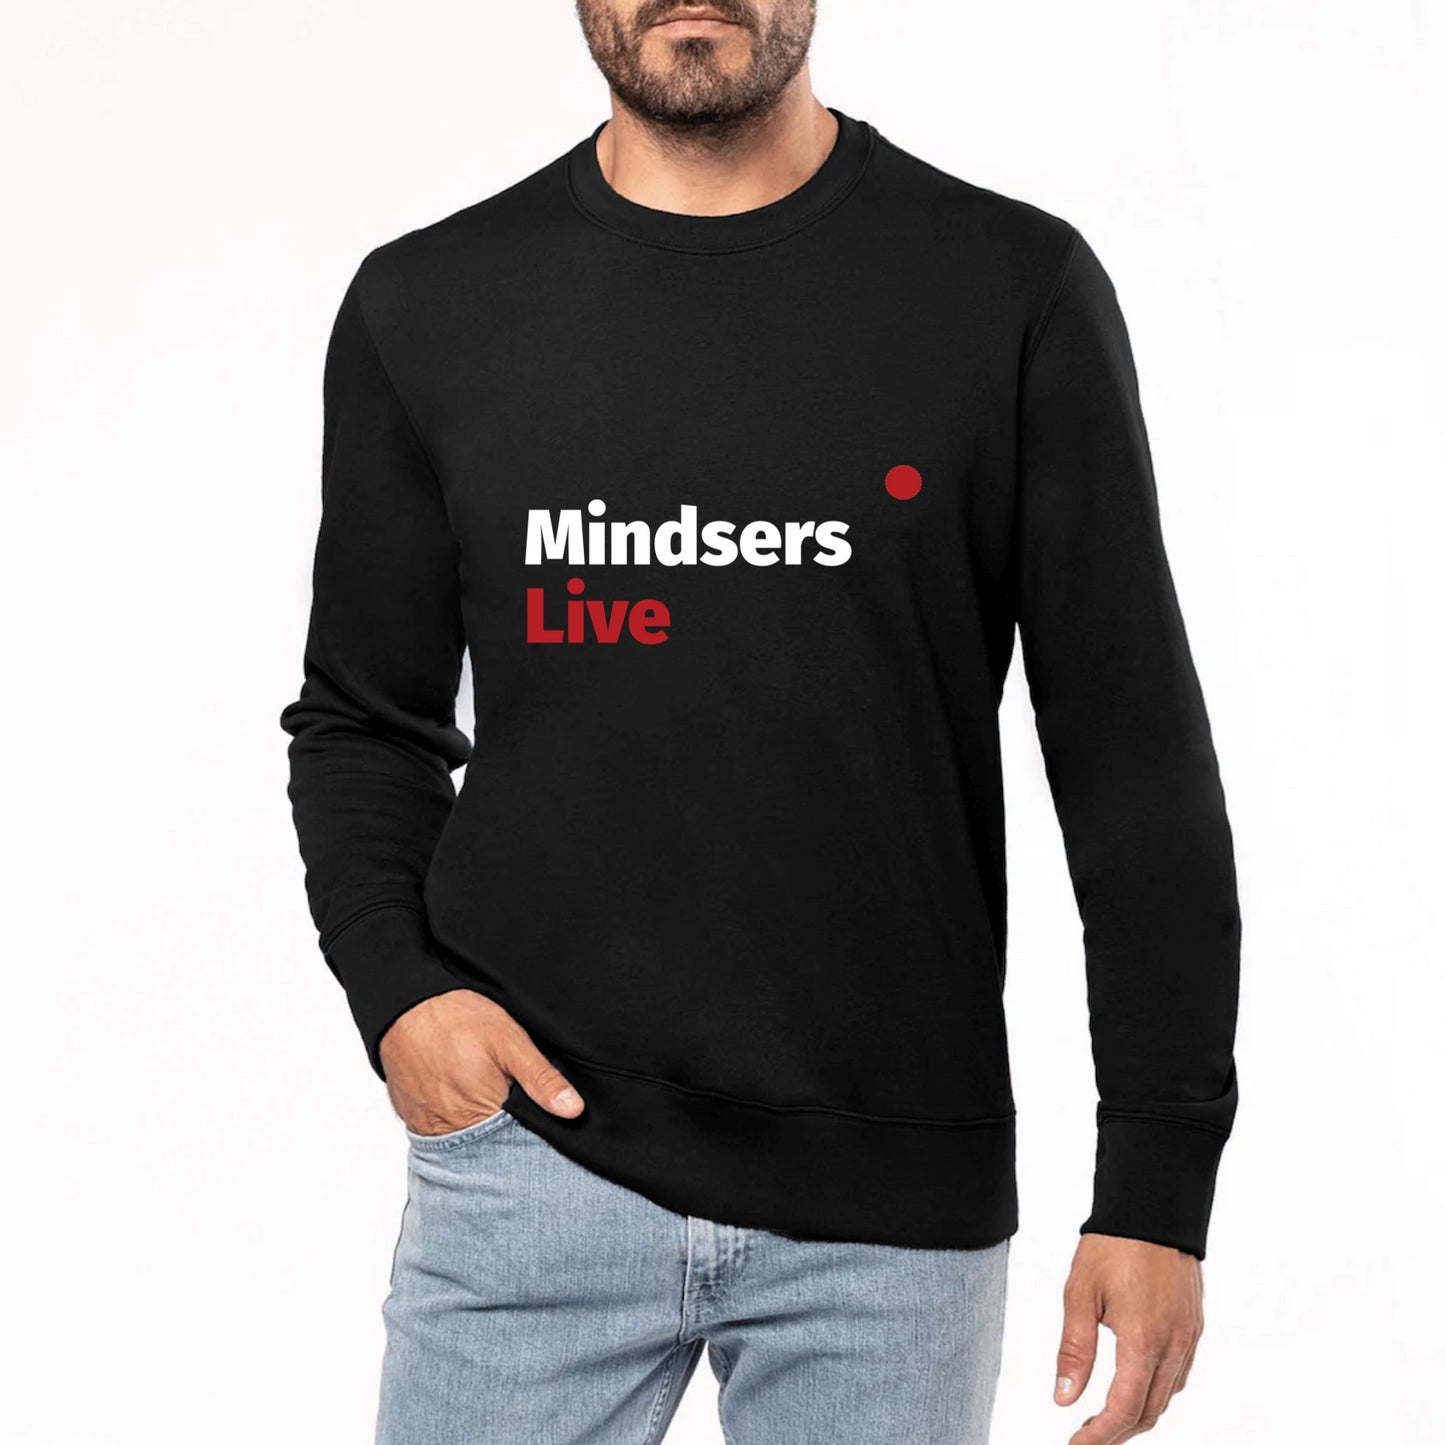 Mindsers Live – sweatshirt, unisex, organic